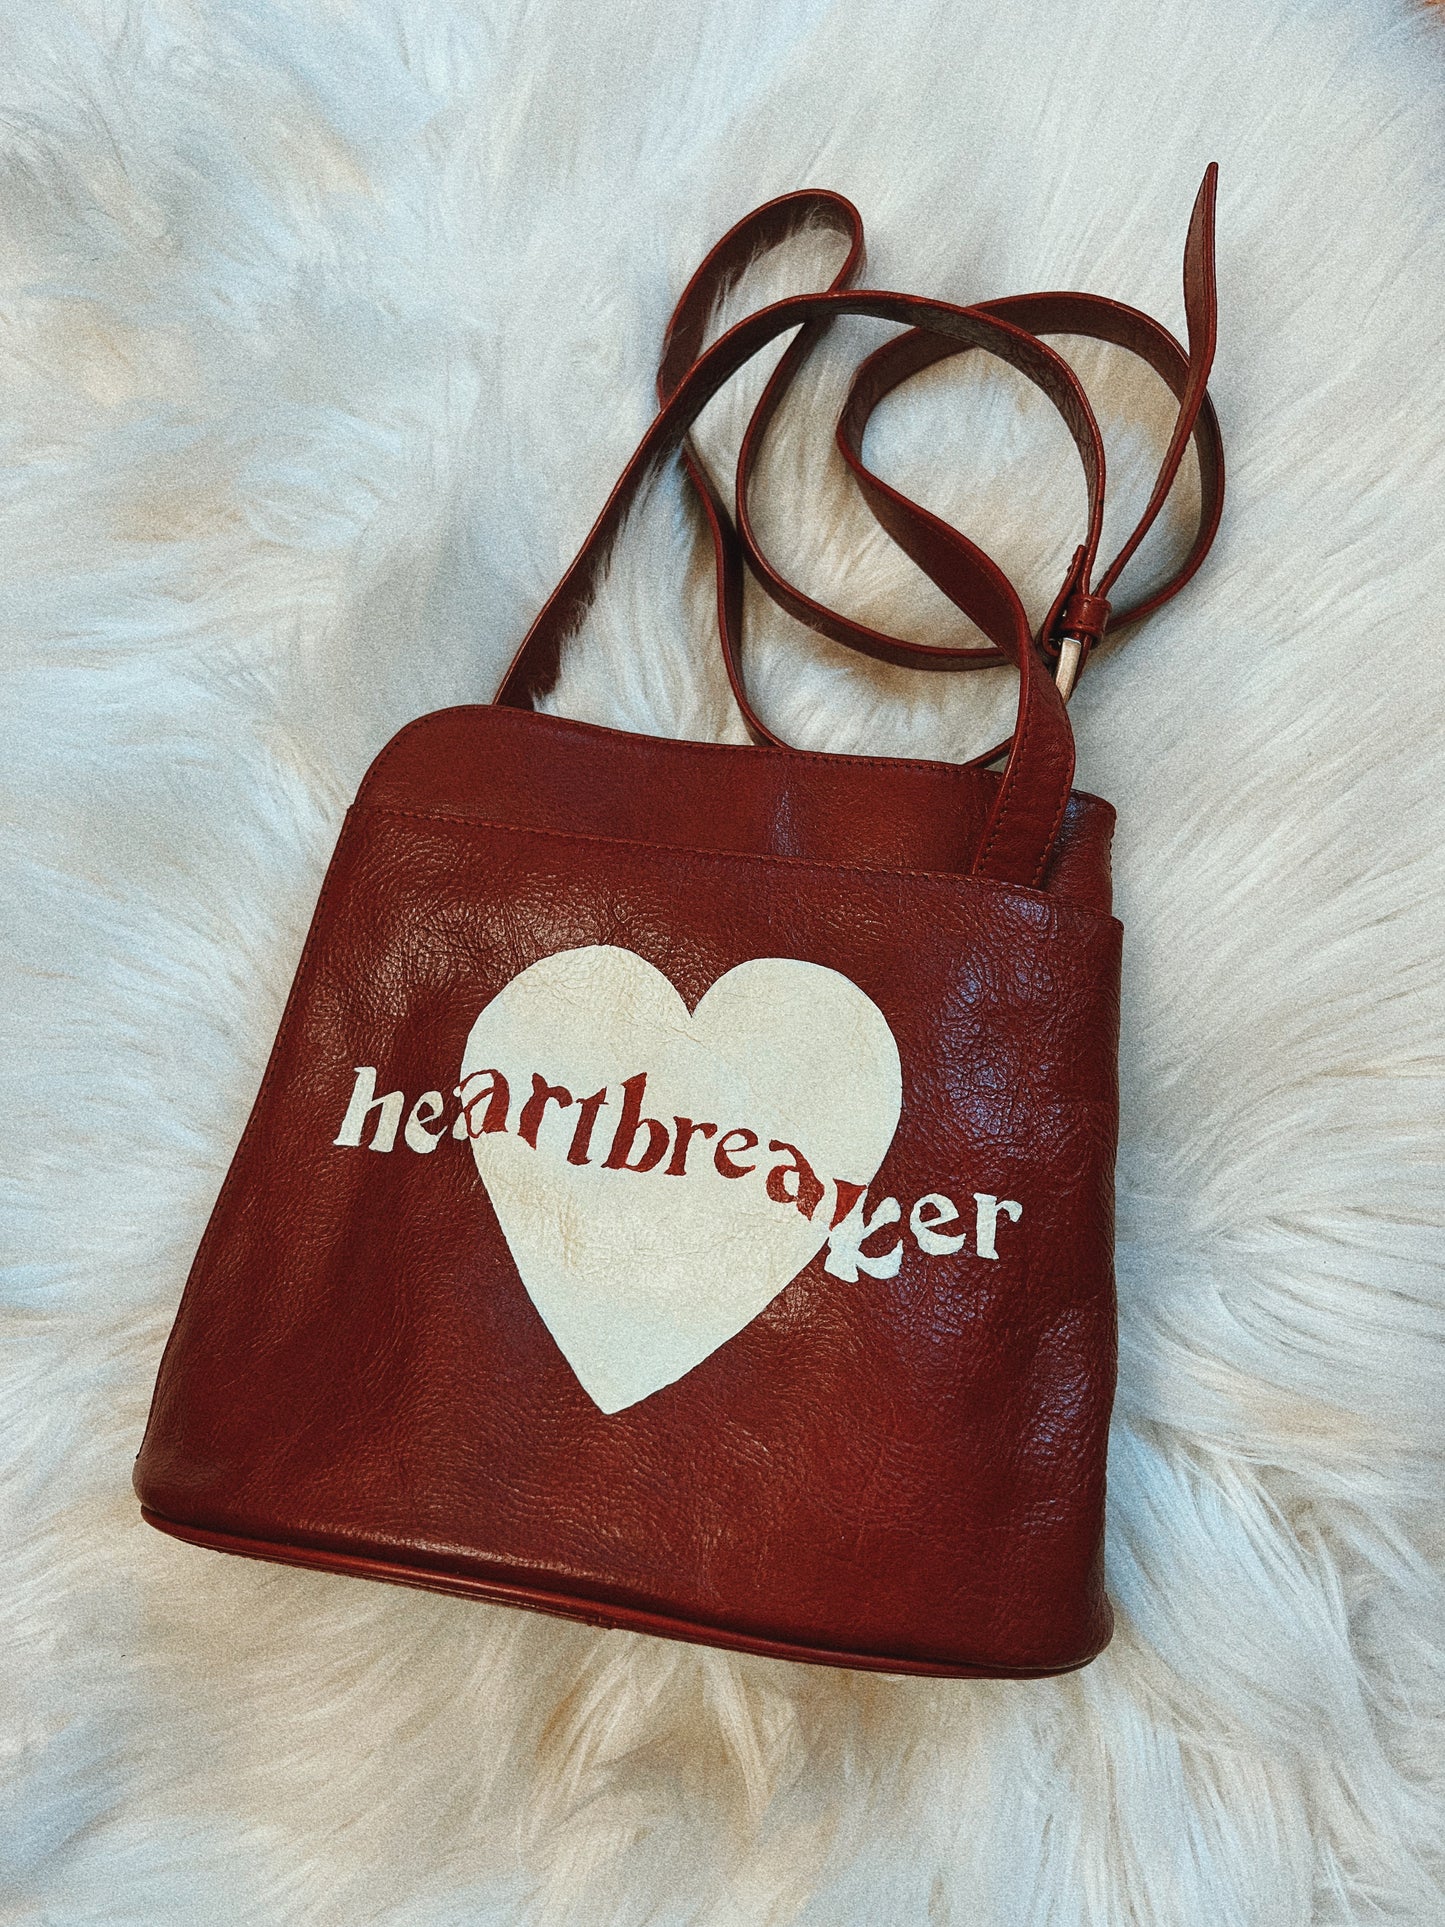 The Heartbreaker Bag